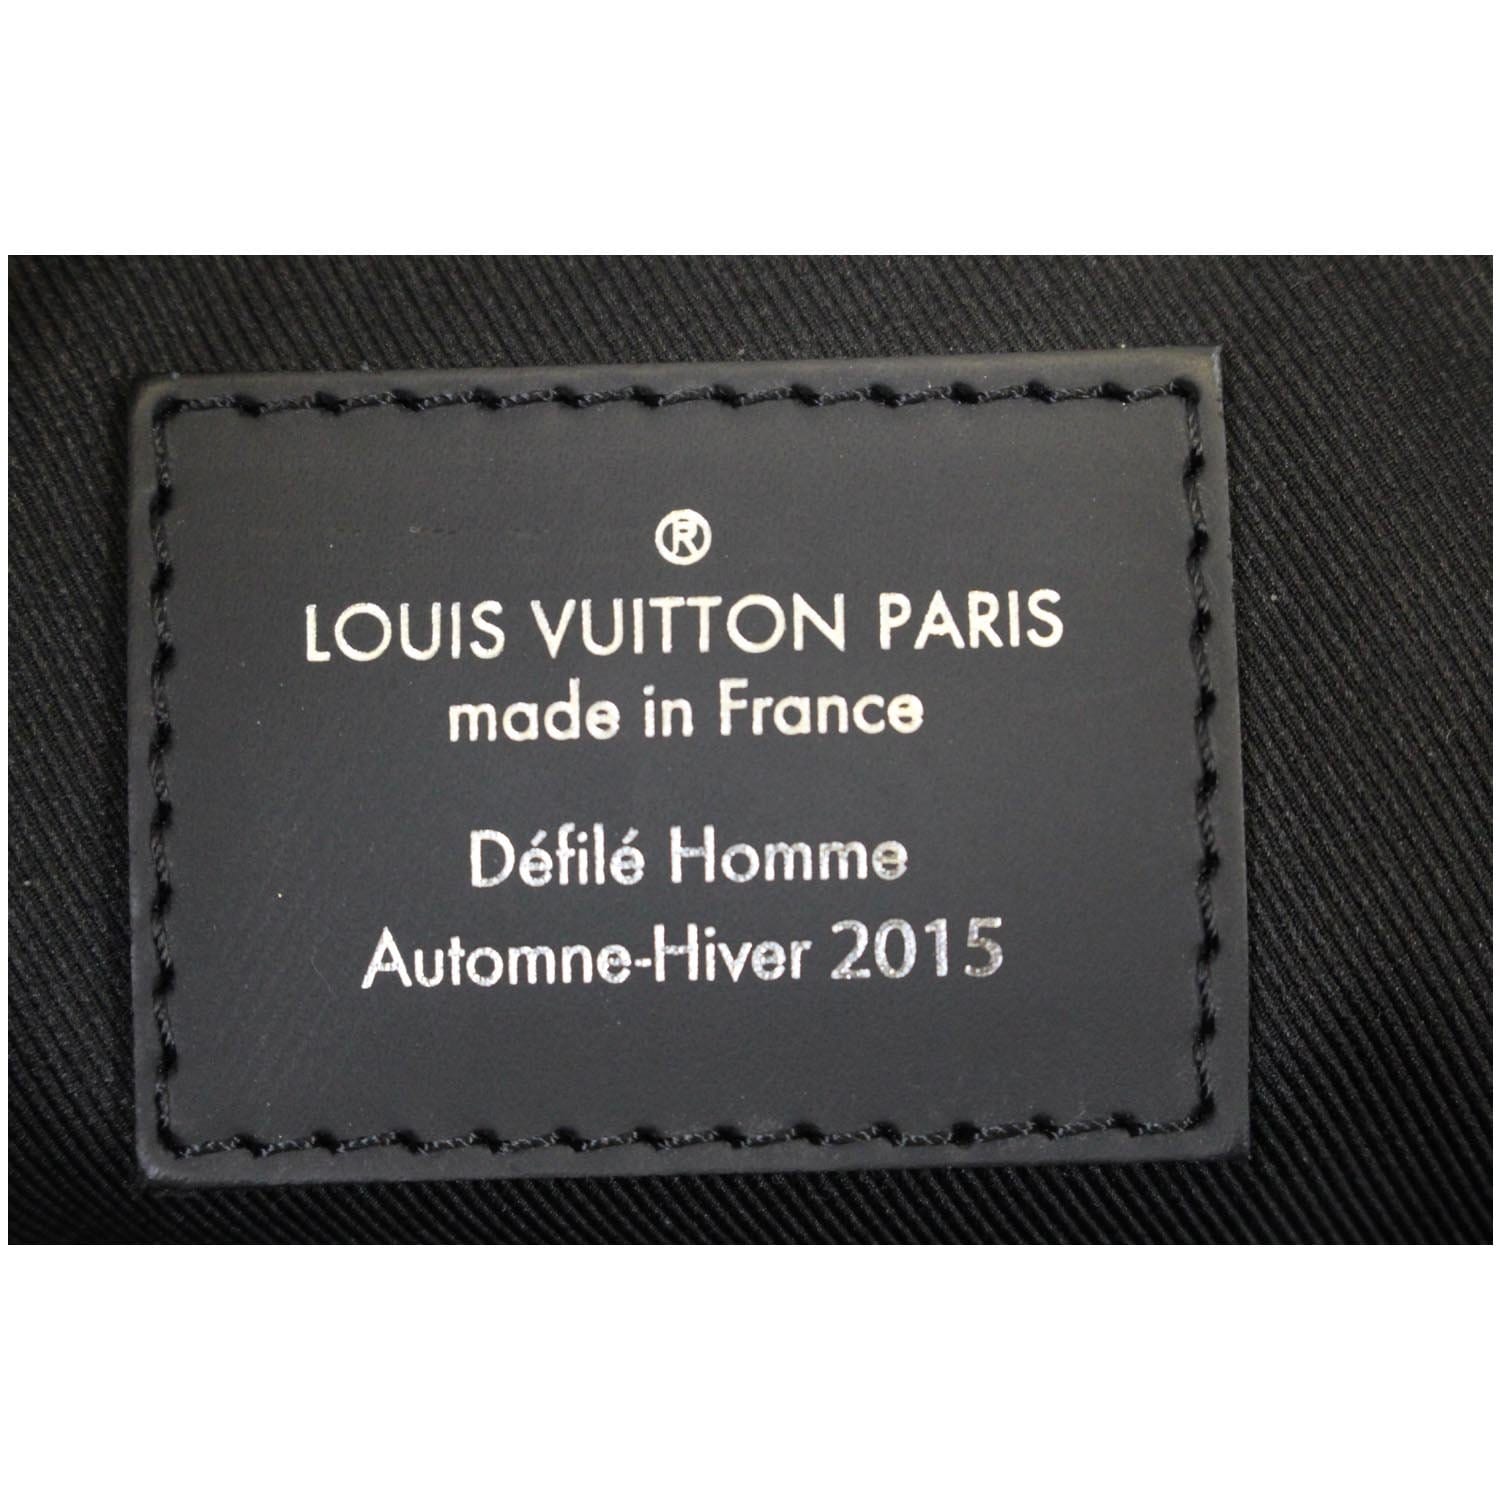 Louis Vuitton Nemeth - 3 For Sale on 1stDibs  christopher nemeth louis  vuitton, louis vuitton christopher nemeth, pochette voyage